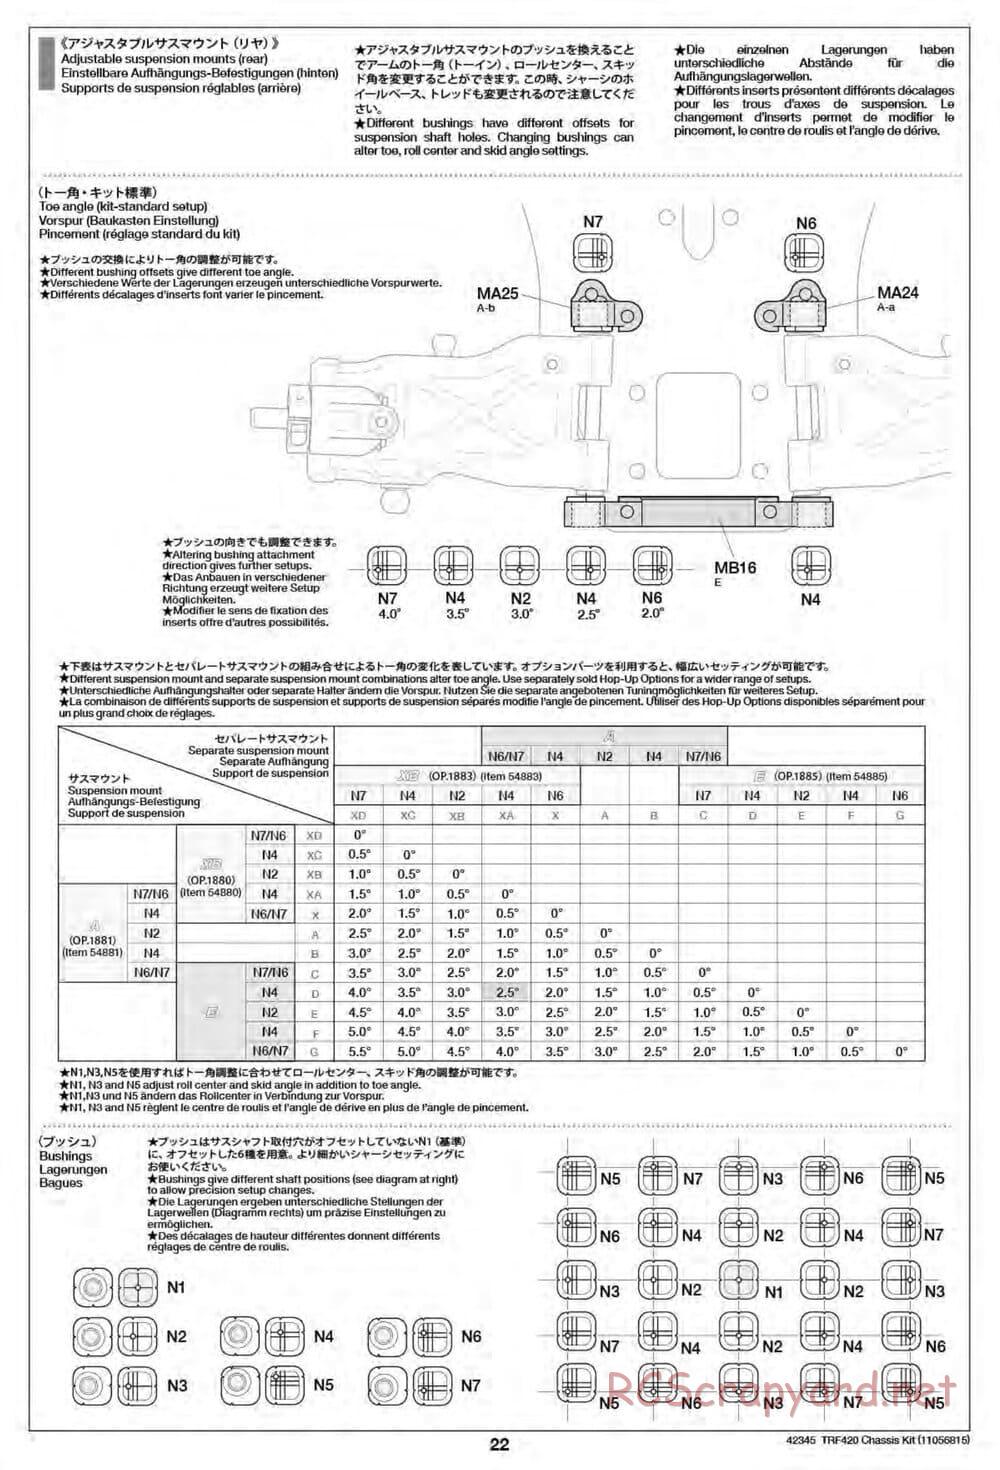 Tamiya - TRF420 Chassis - Manual - Page 22